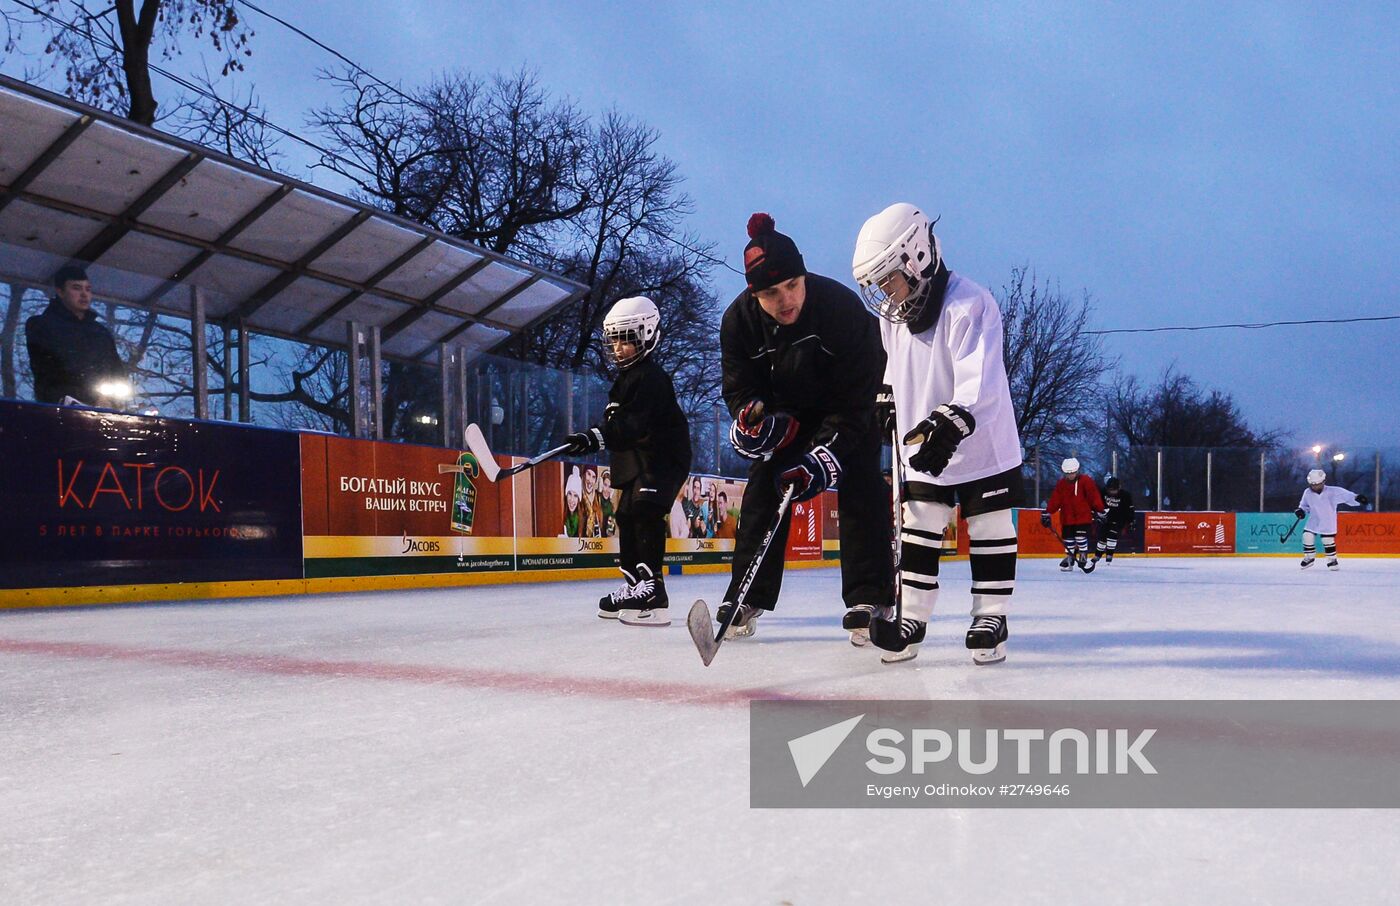 Free ice hockey school for children opens in Gorky Park